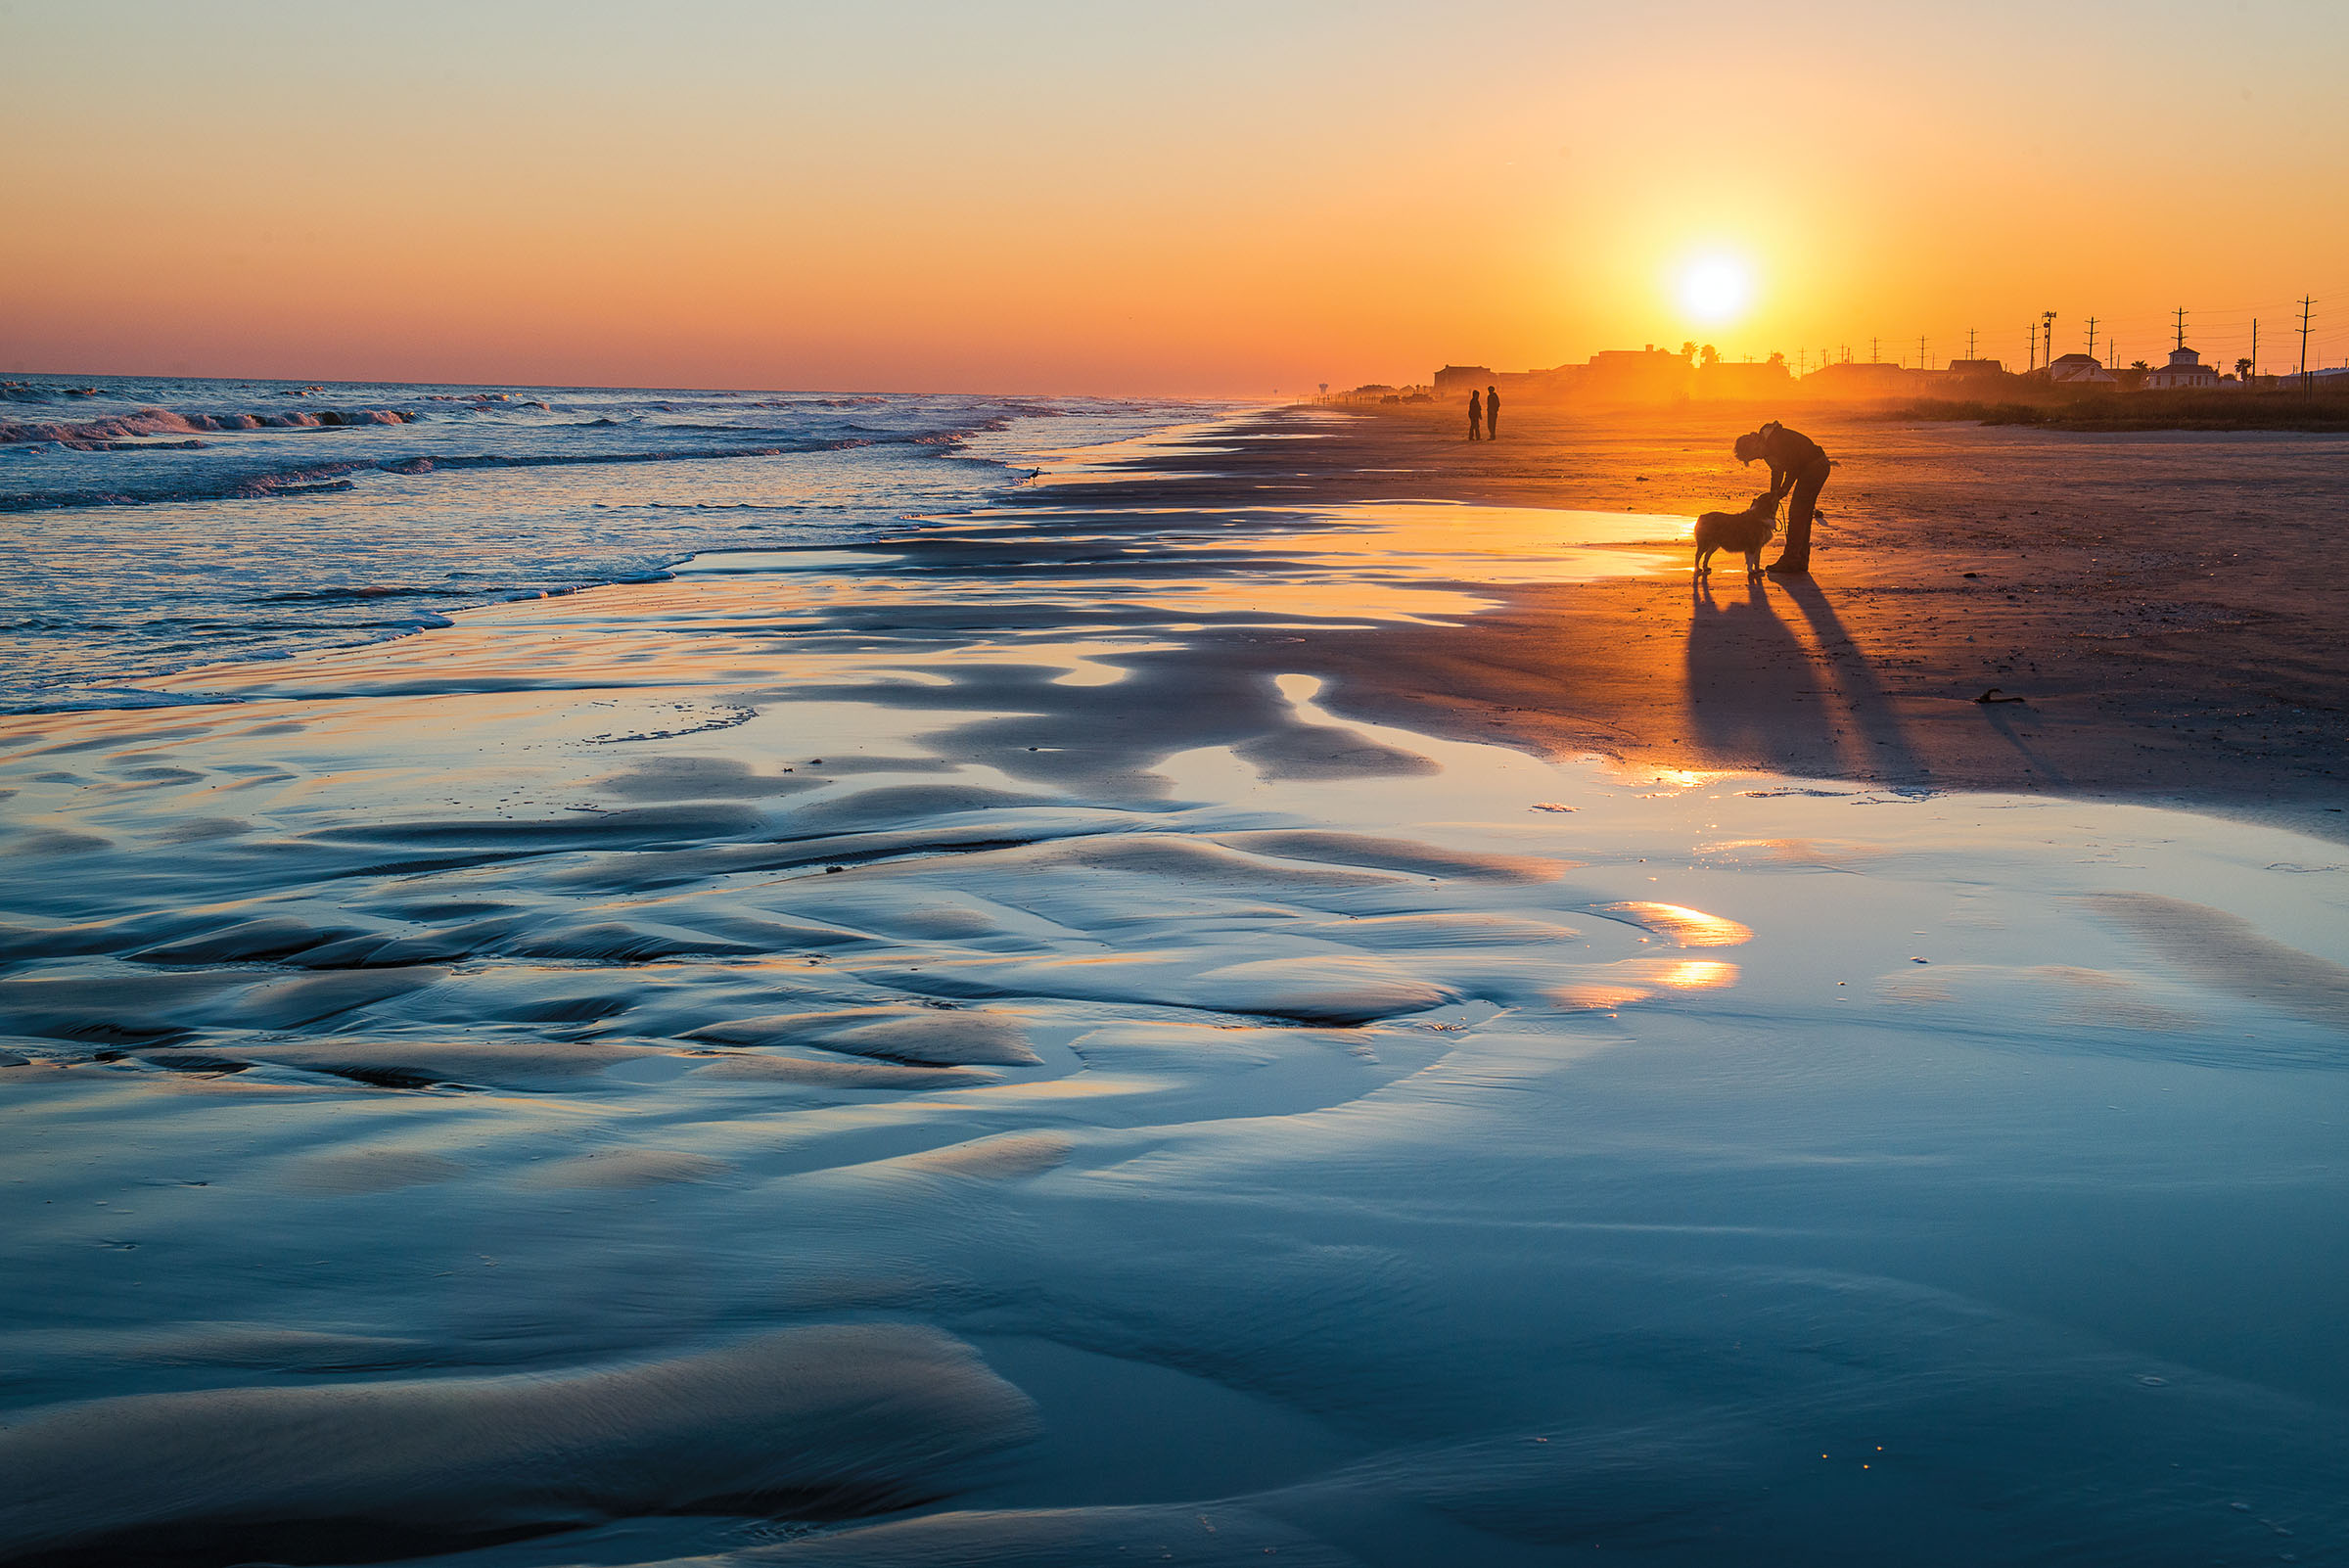 Jamaica Beach, Galveston Island State Park, sunset